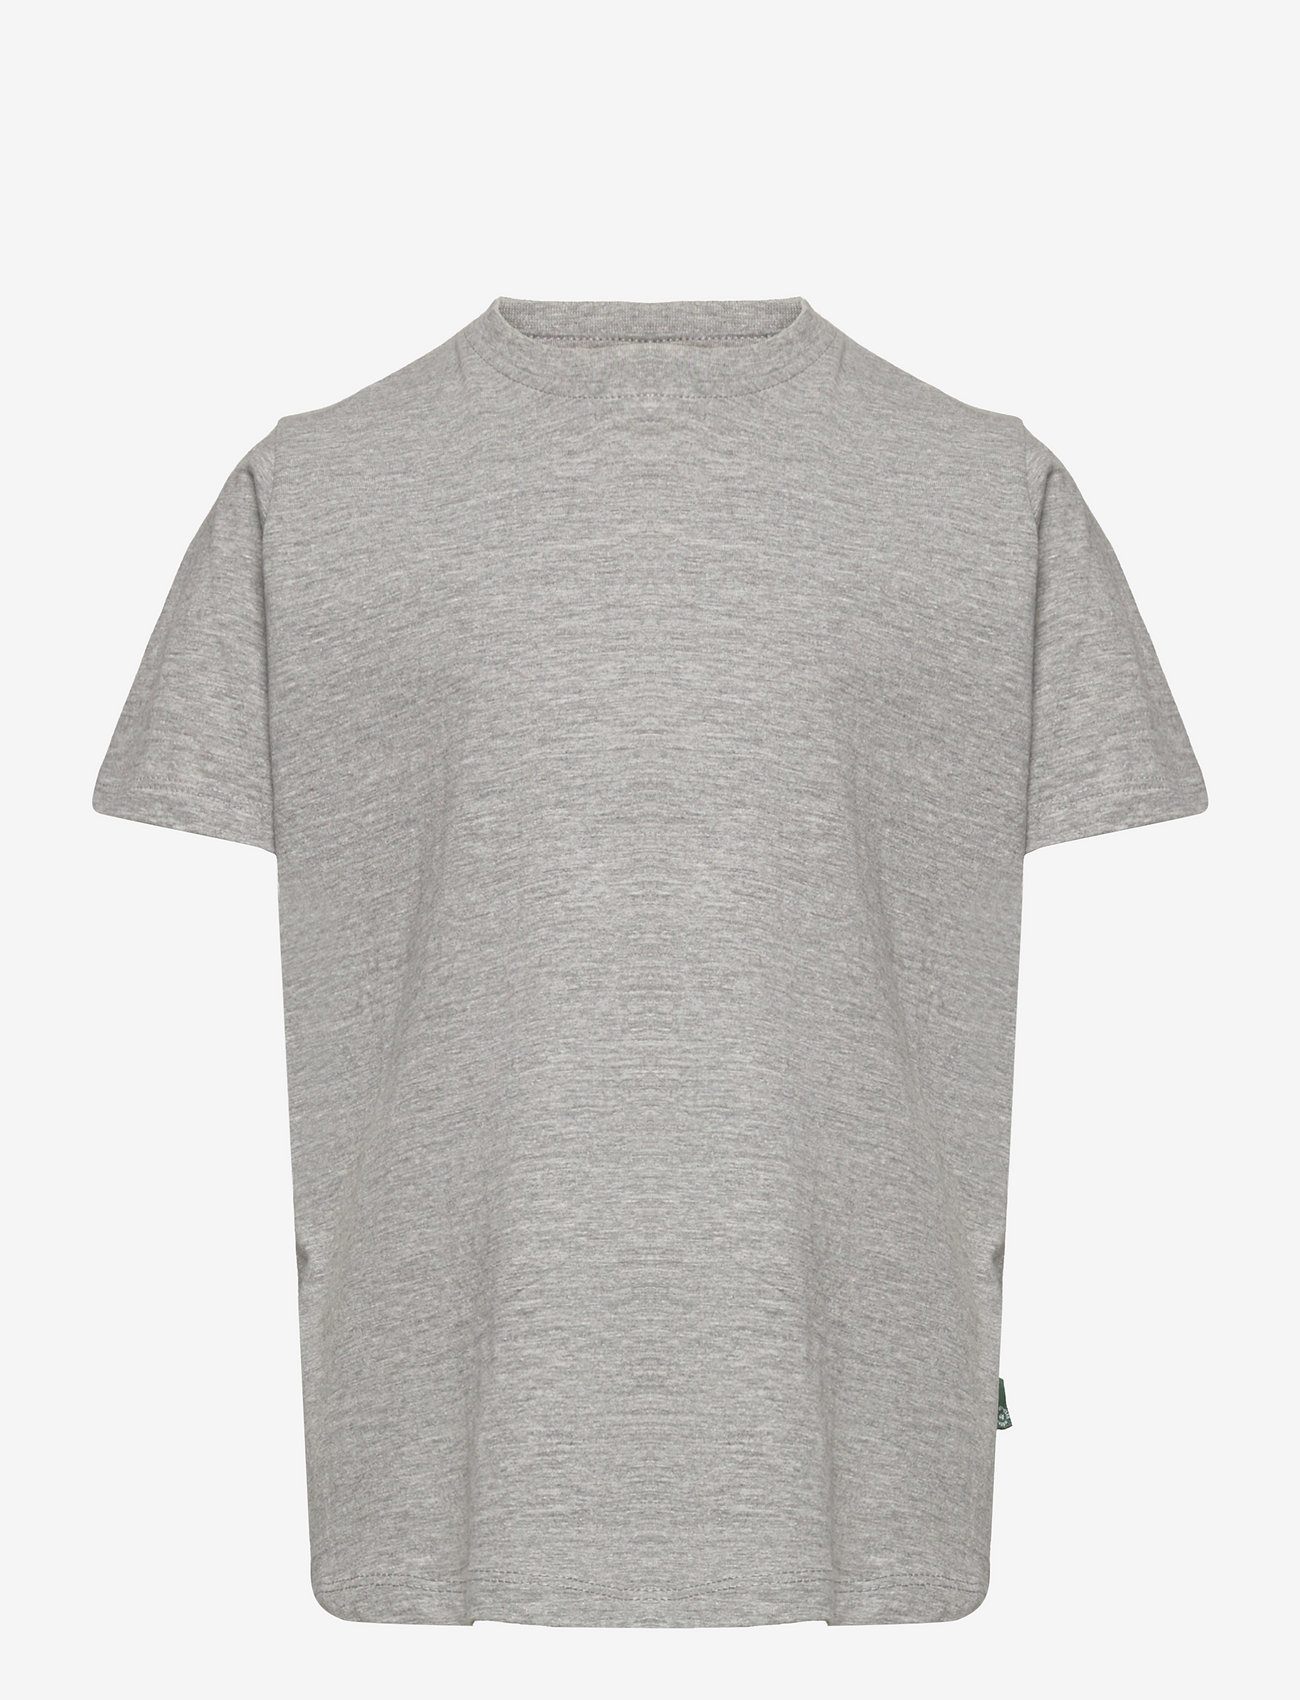 Kronstadt - Timmi Kids Organic/Recycled t-shirt - kortärmade - grey mel - 0